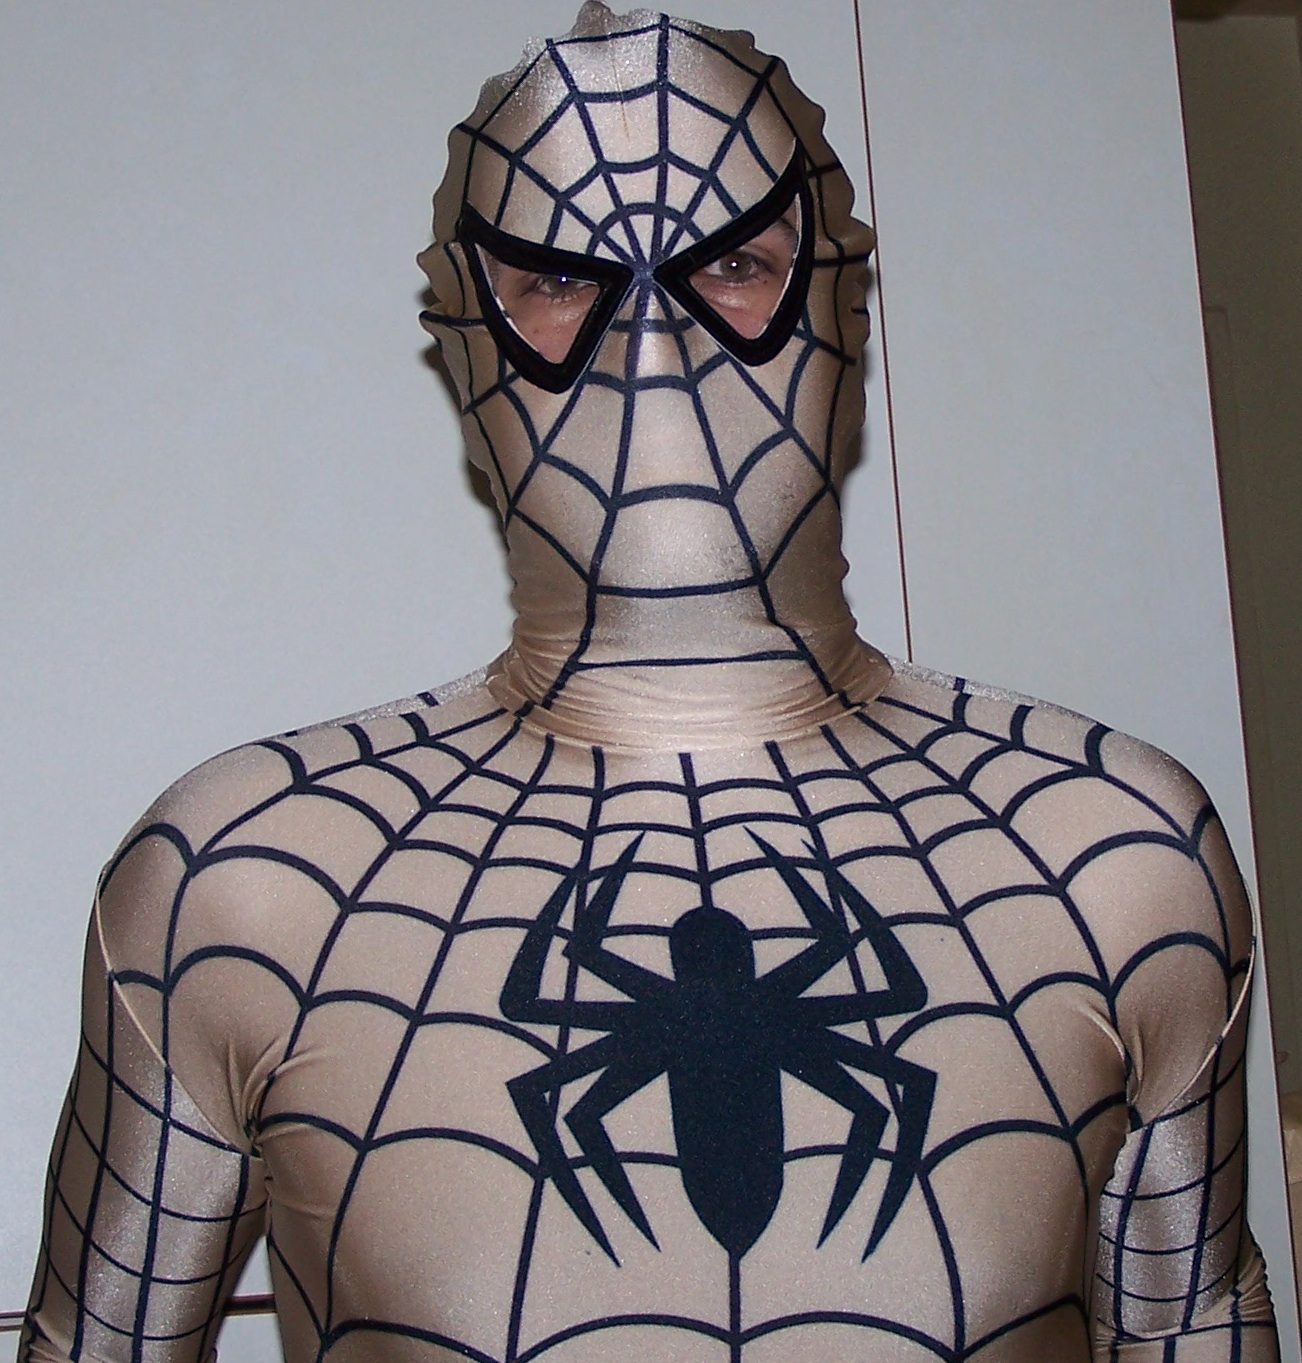 spiderman2
